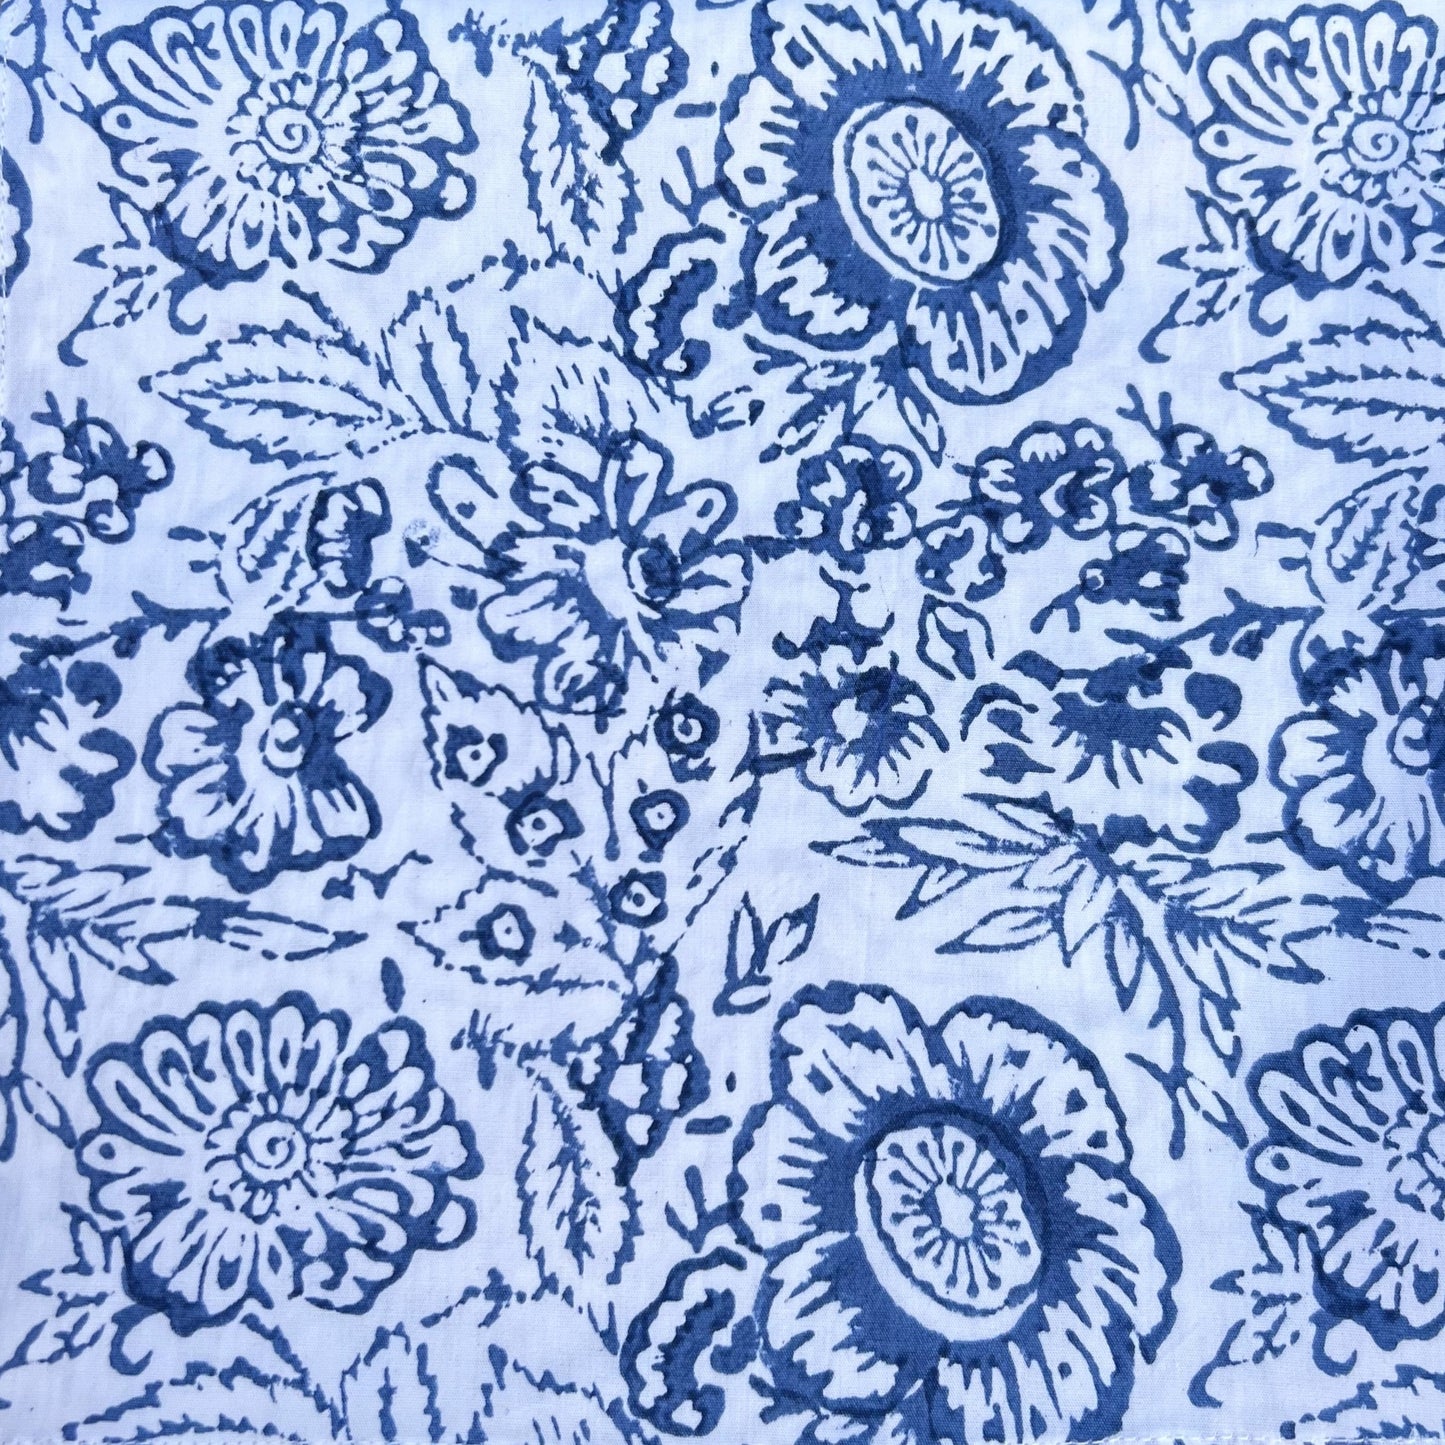 4 x block print floral cotton napkin white and royal blue